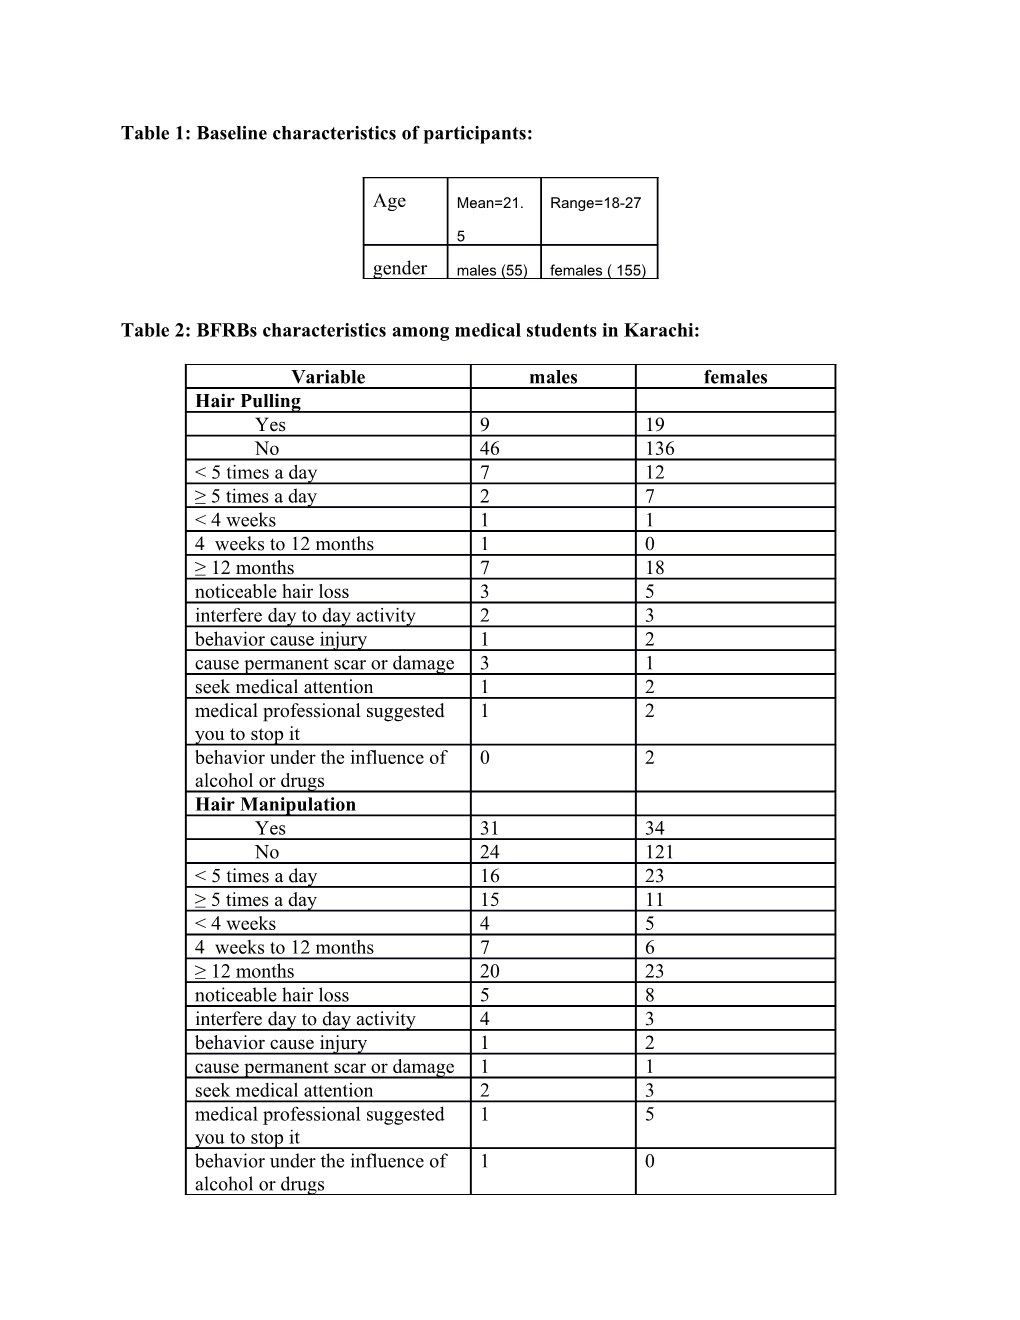 Table 1: Baseline Characteristics of Participants